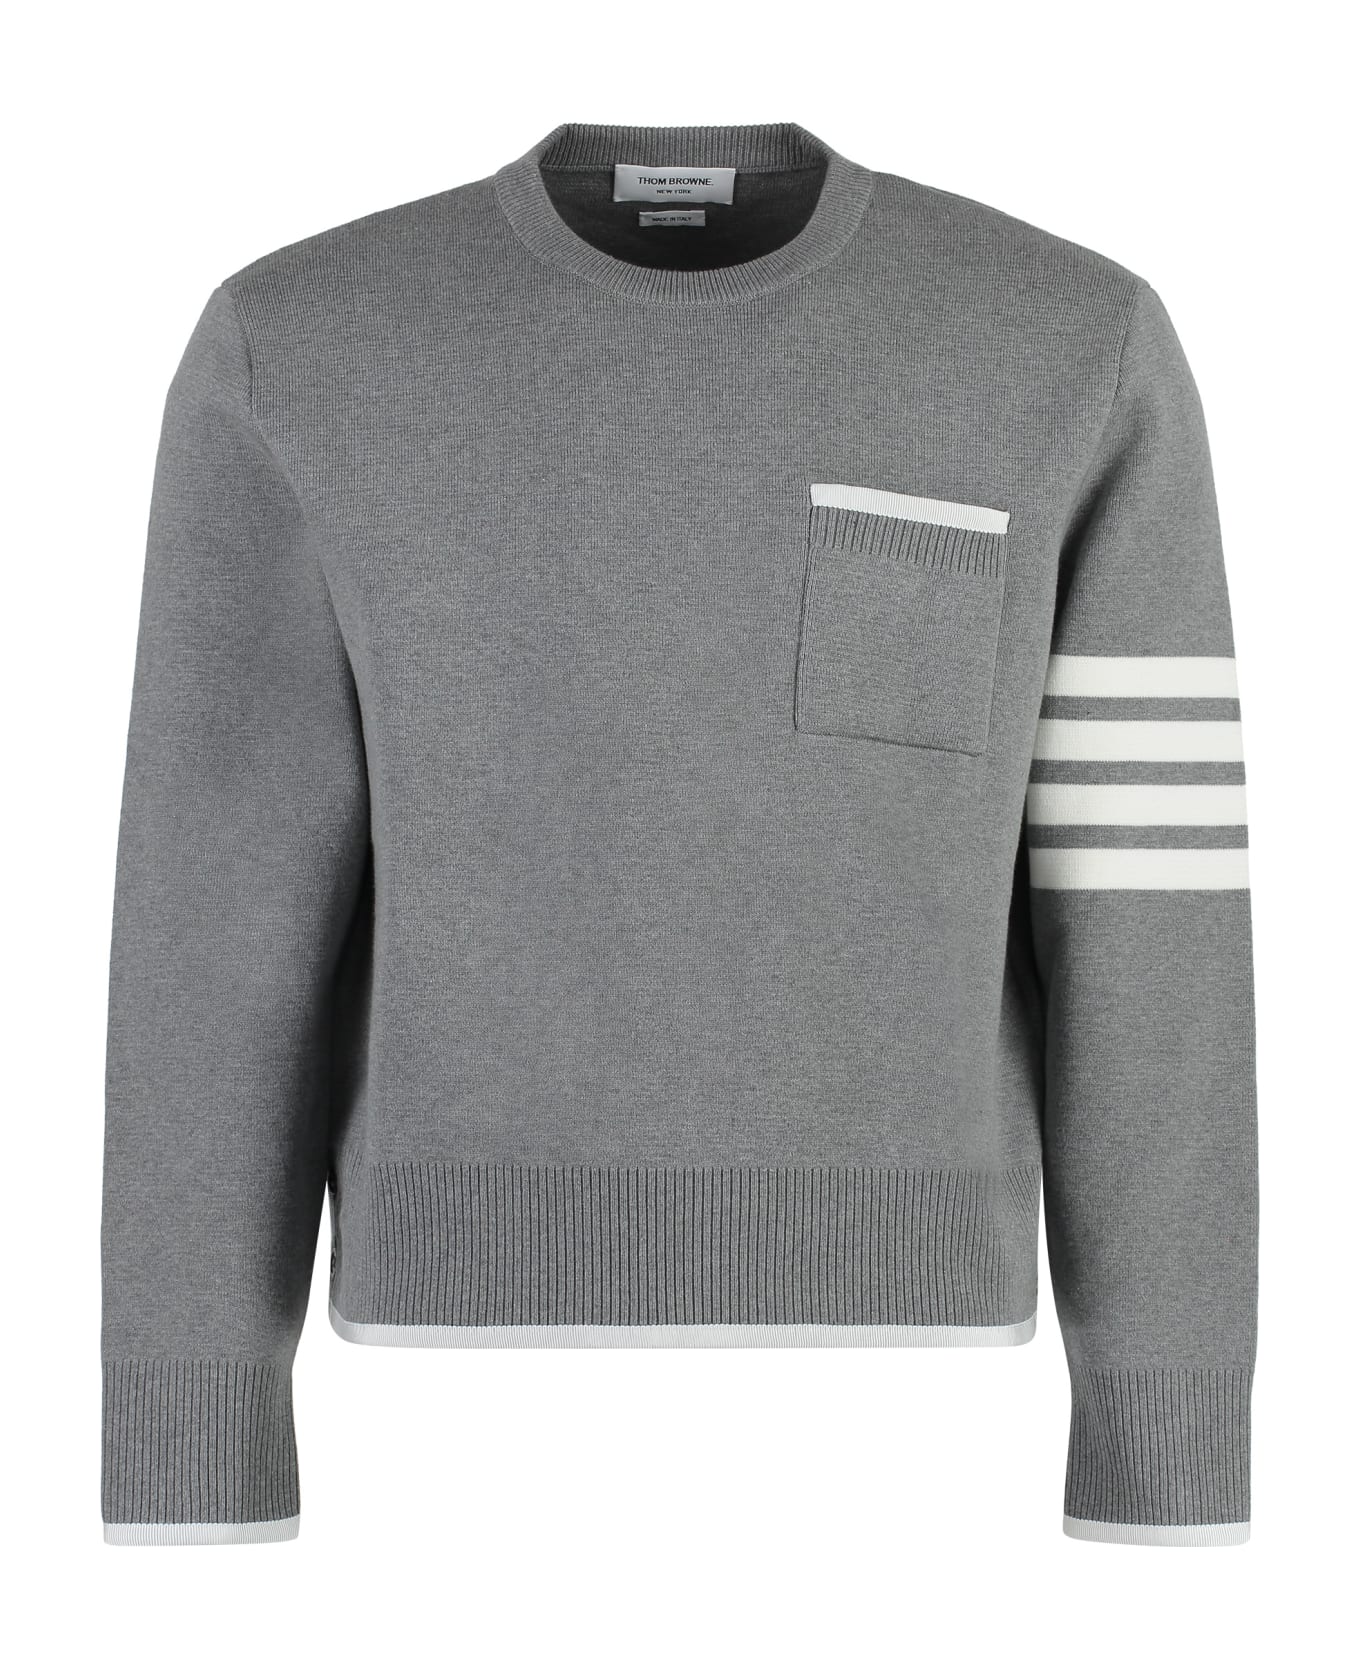 Thom Browne Cotton Crew-neck Sweater - grey